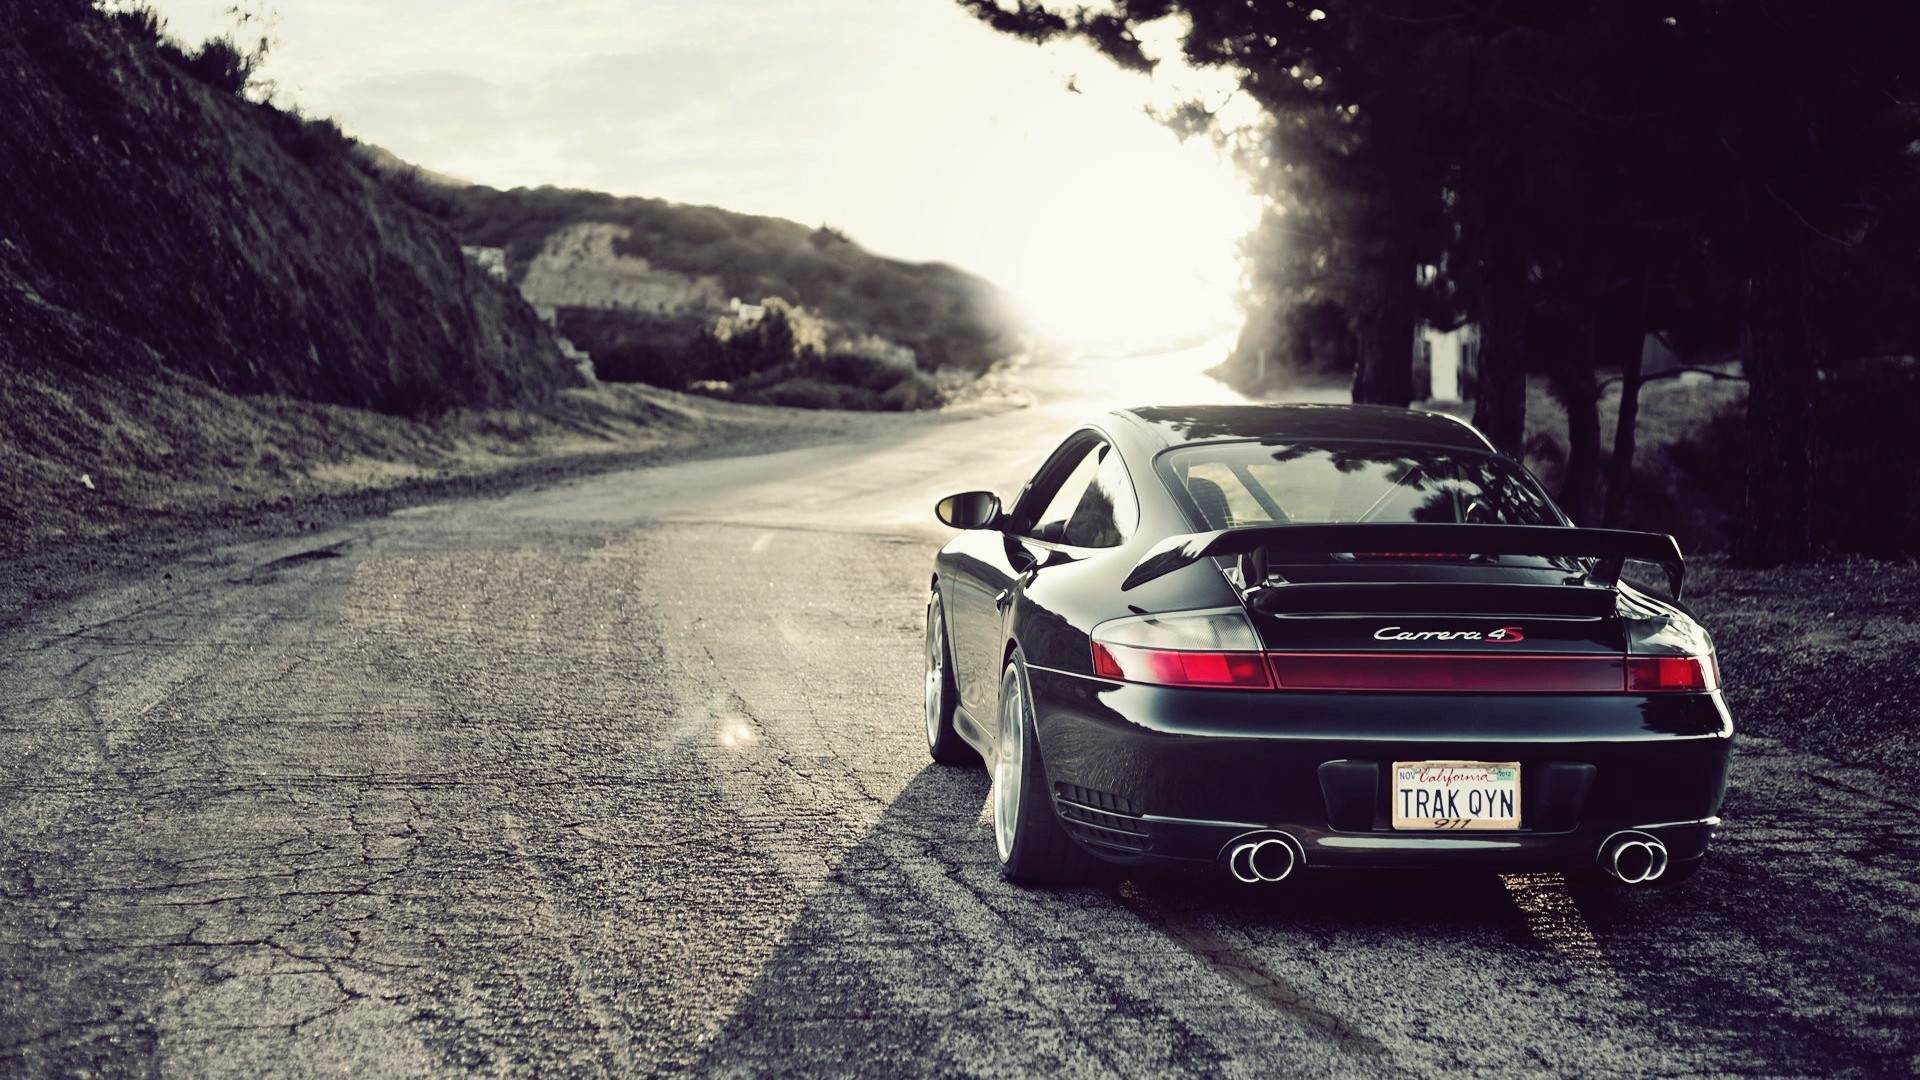 Porsche Carrera 4s HD Wallpaper Background Image